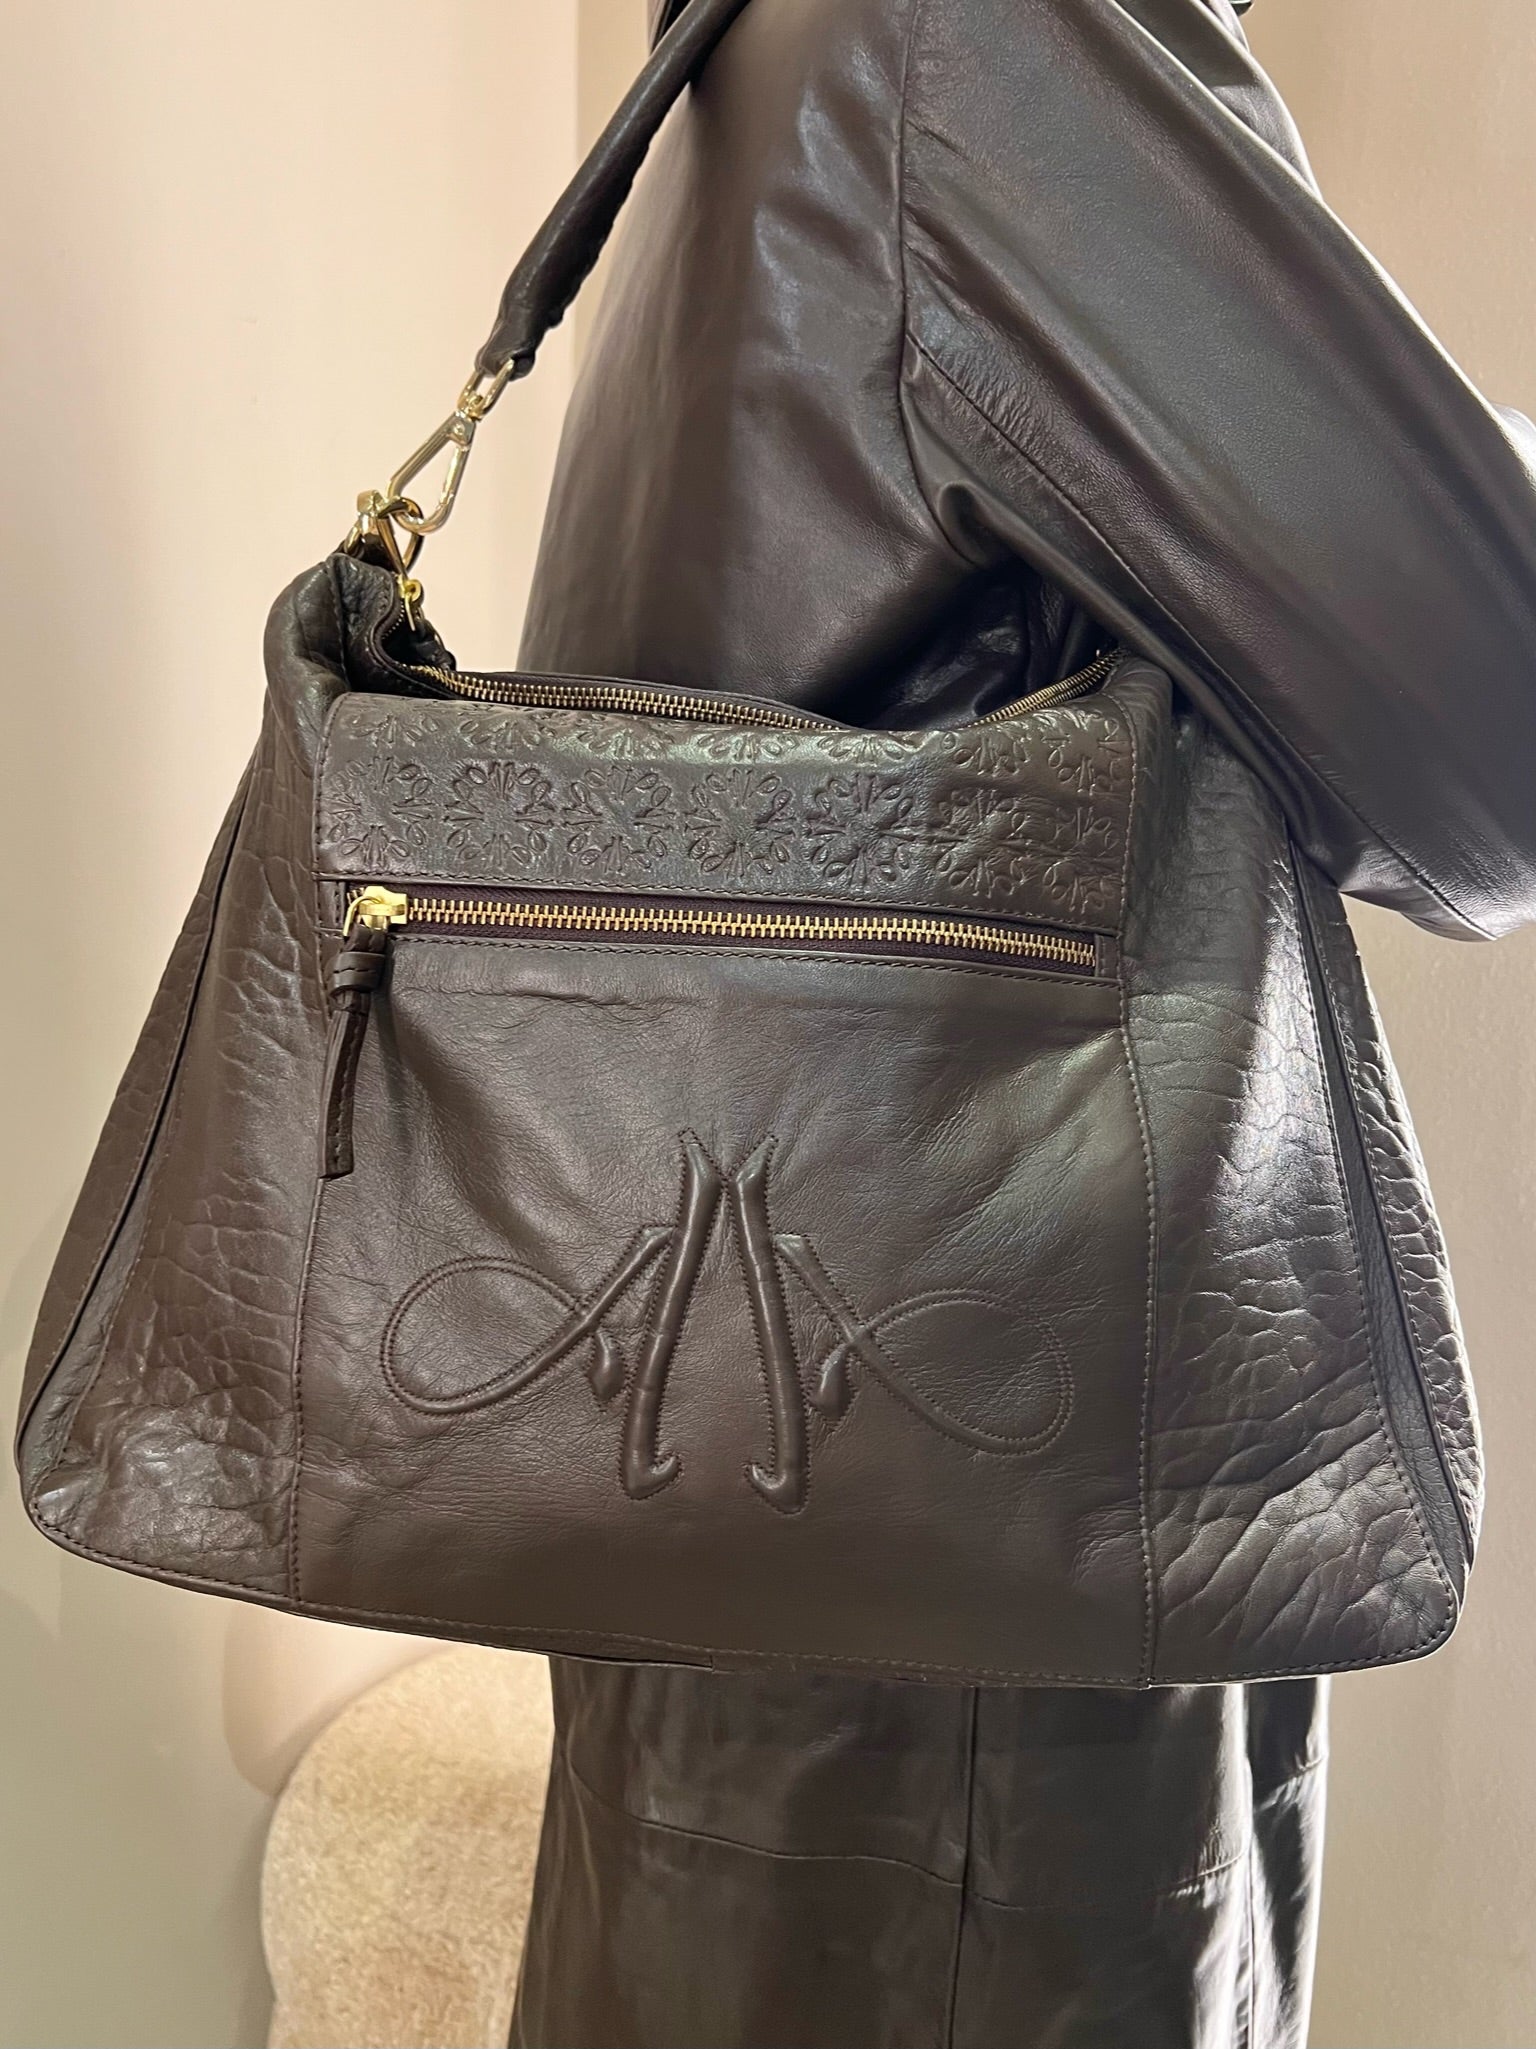 AndreA - "BIG" Leather Bag